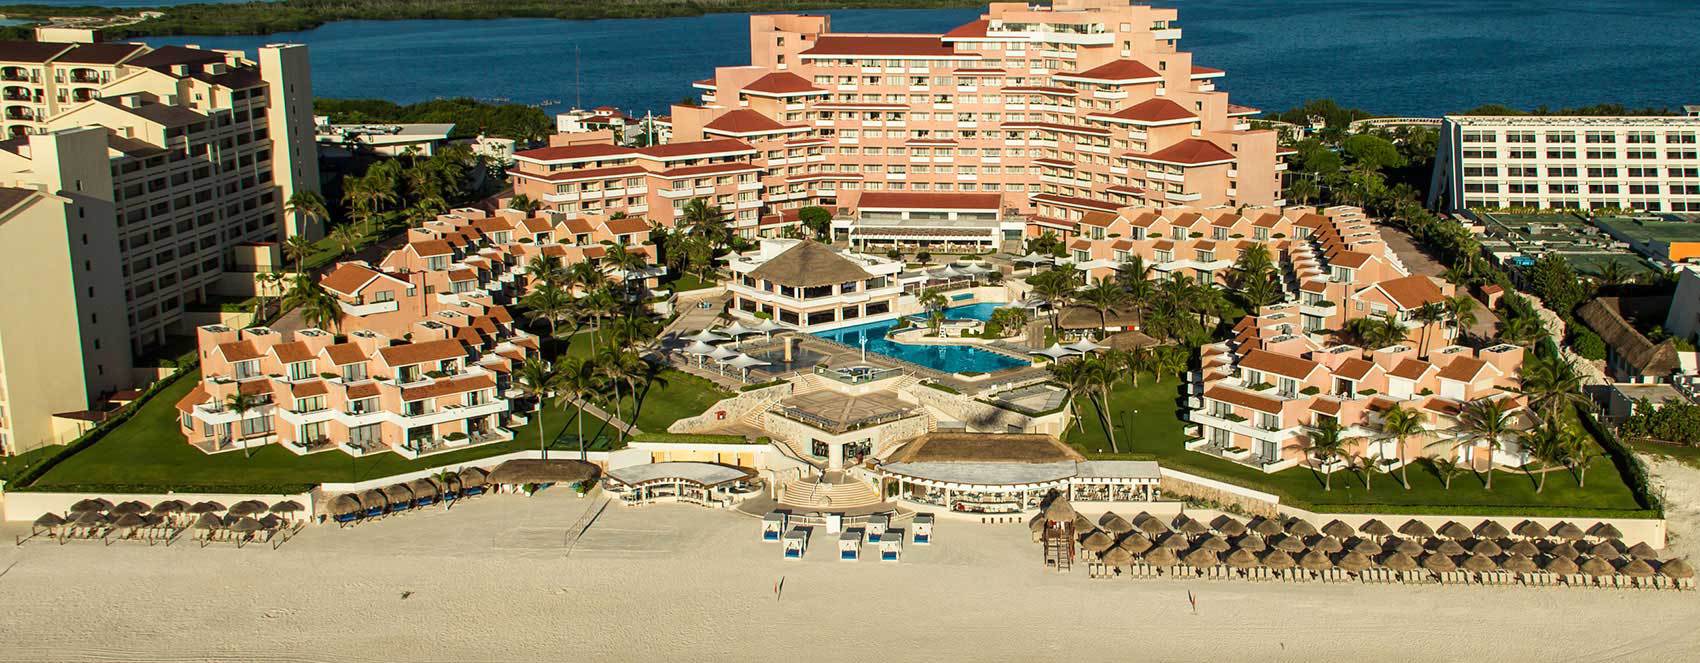 Photo of Omni Cancun Hotel & Villas, Cancún, Q.R., Mexico